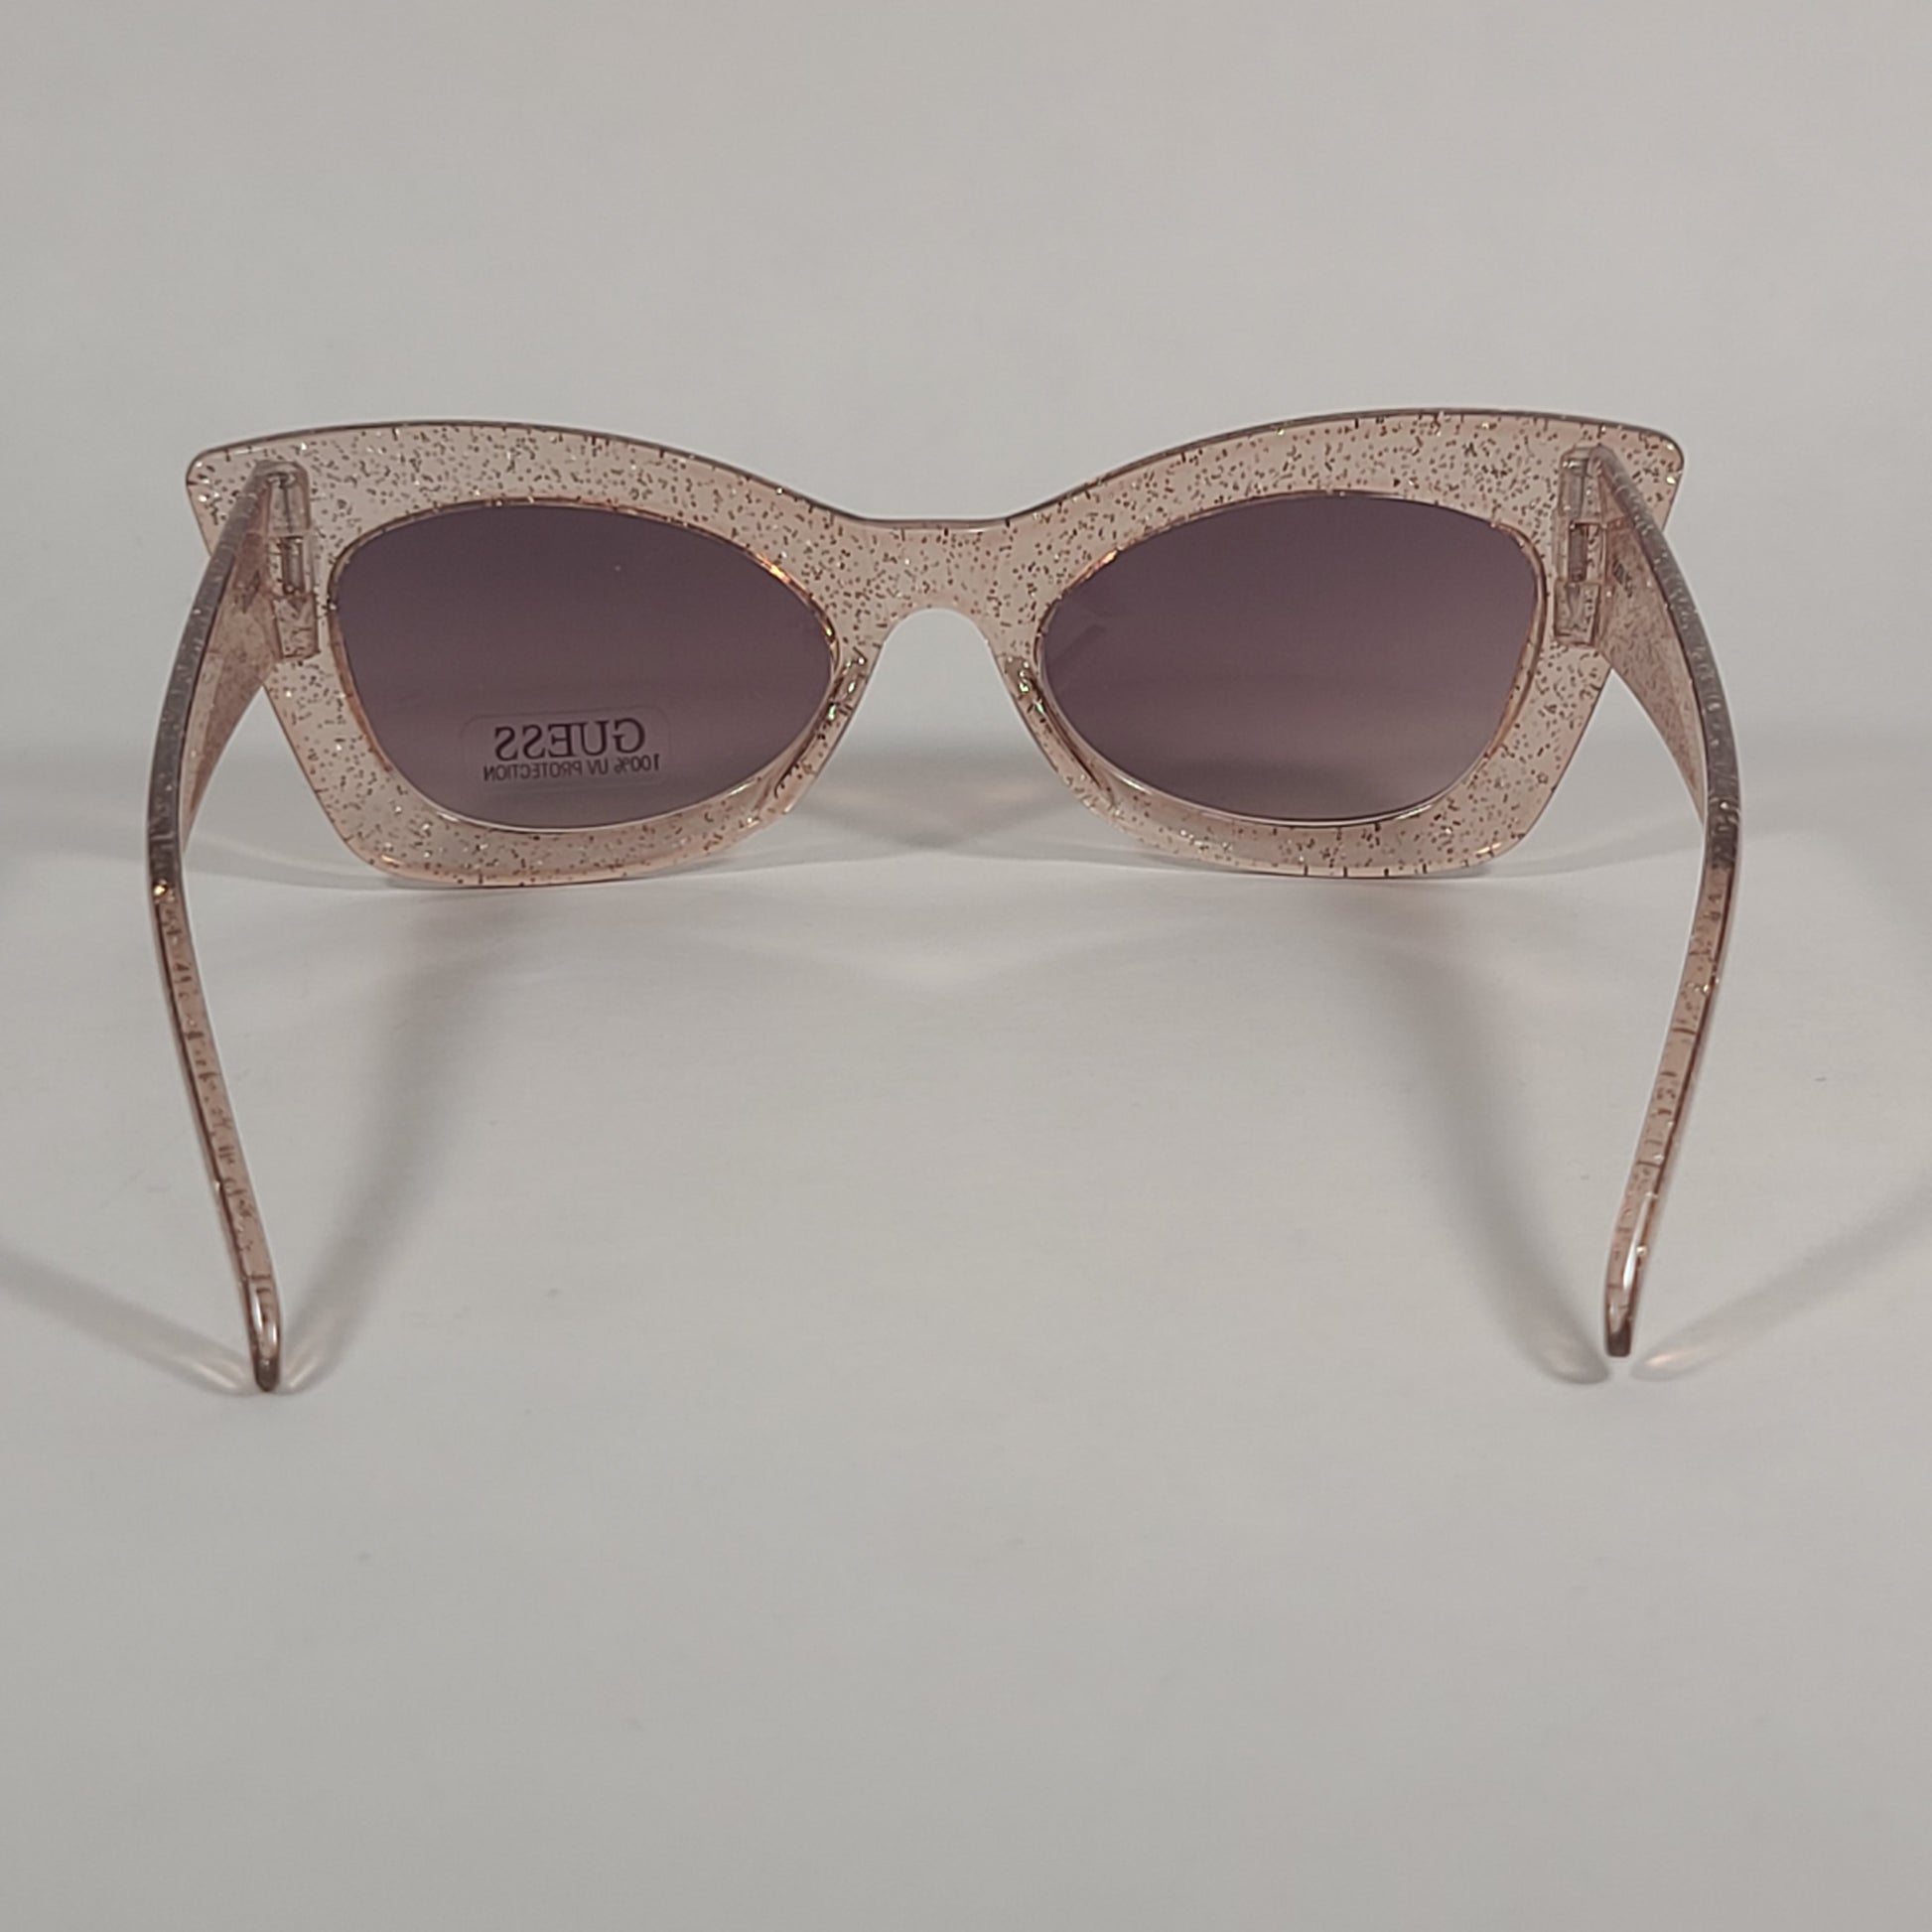 Guess Cat Eye Sunglasses Clear Pink Glitter Frame Brown Gradient Lens GF0346 47F - Sunglasses